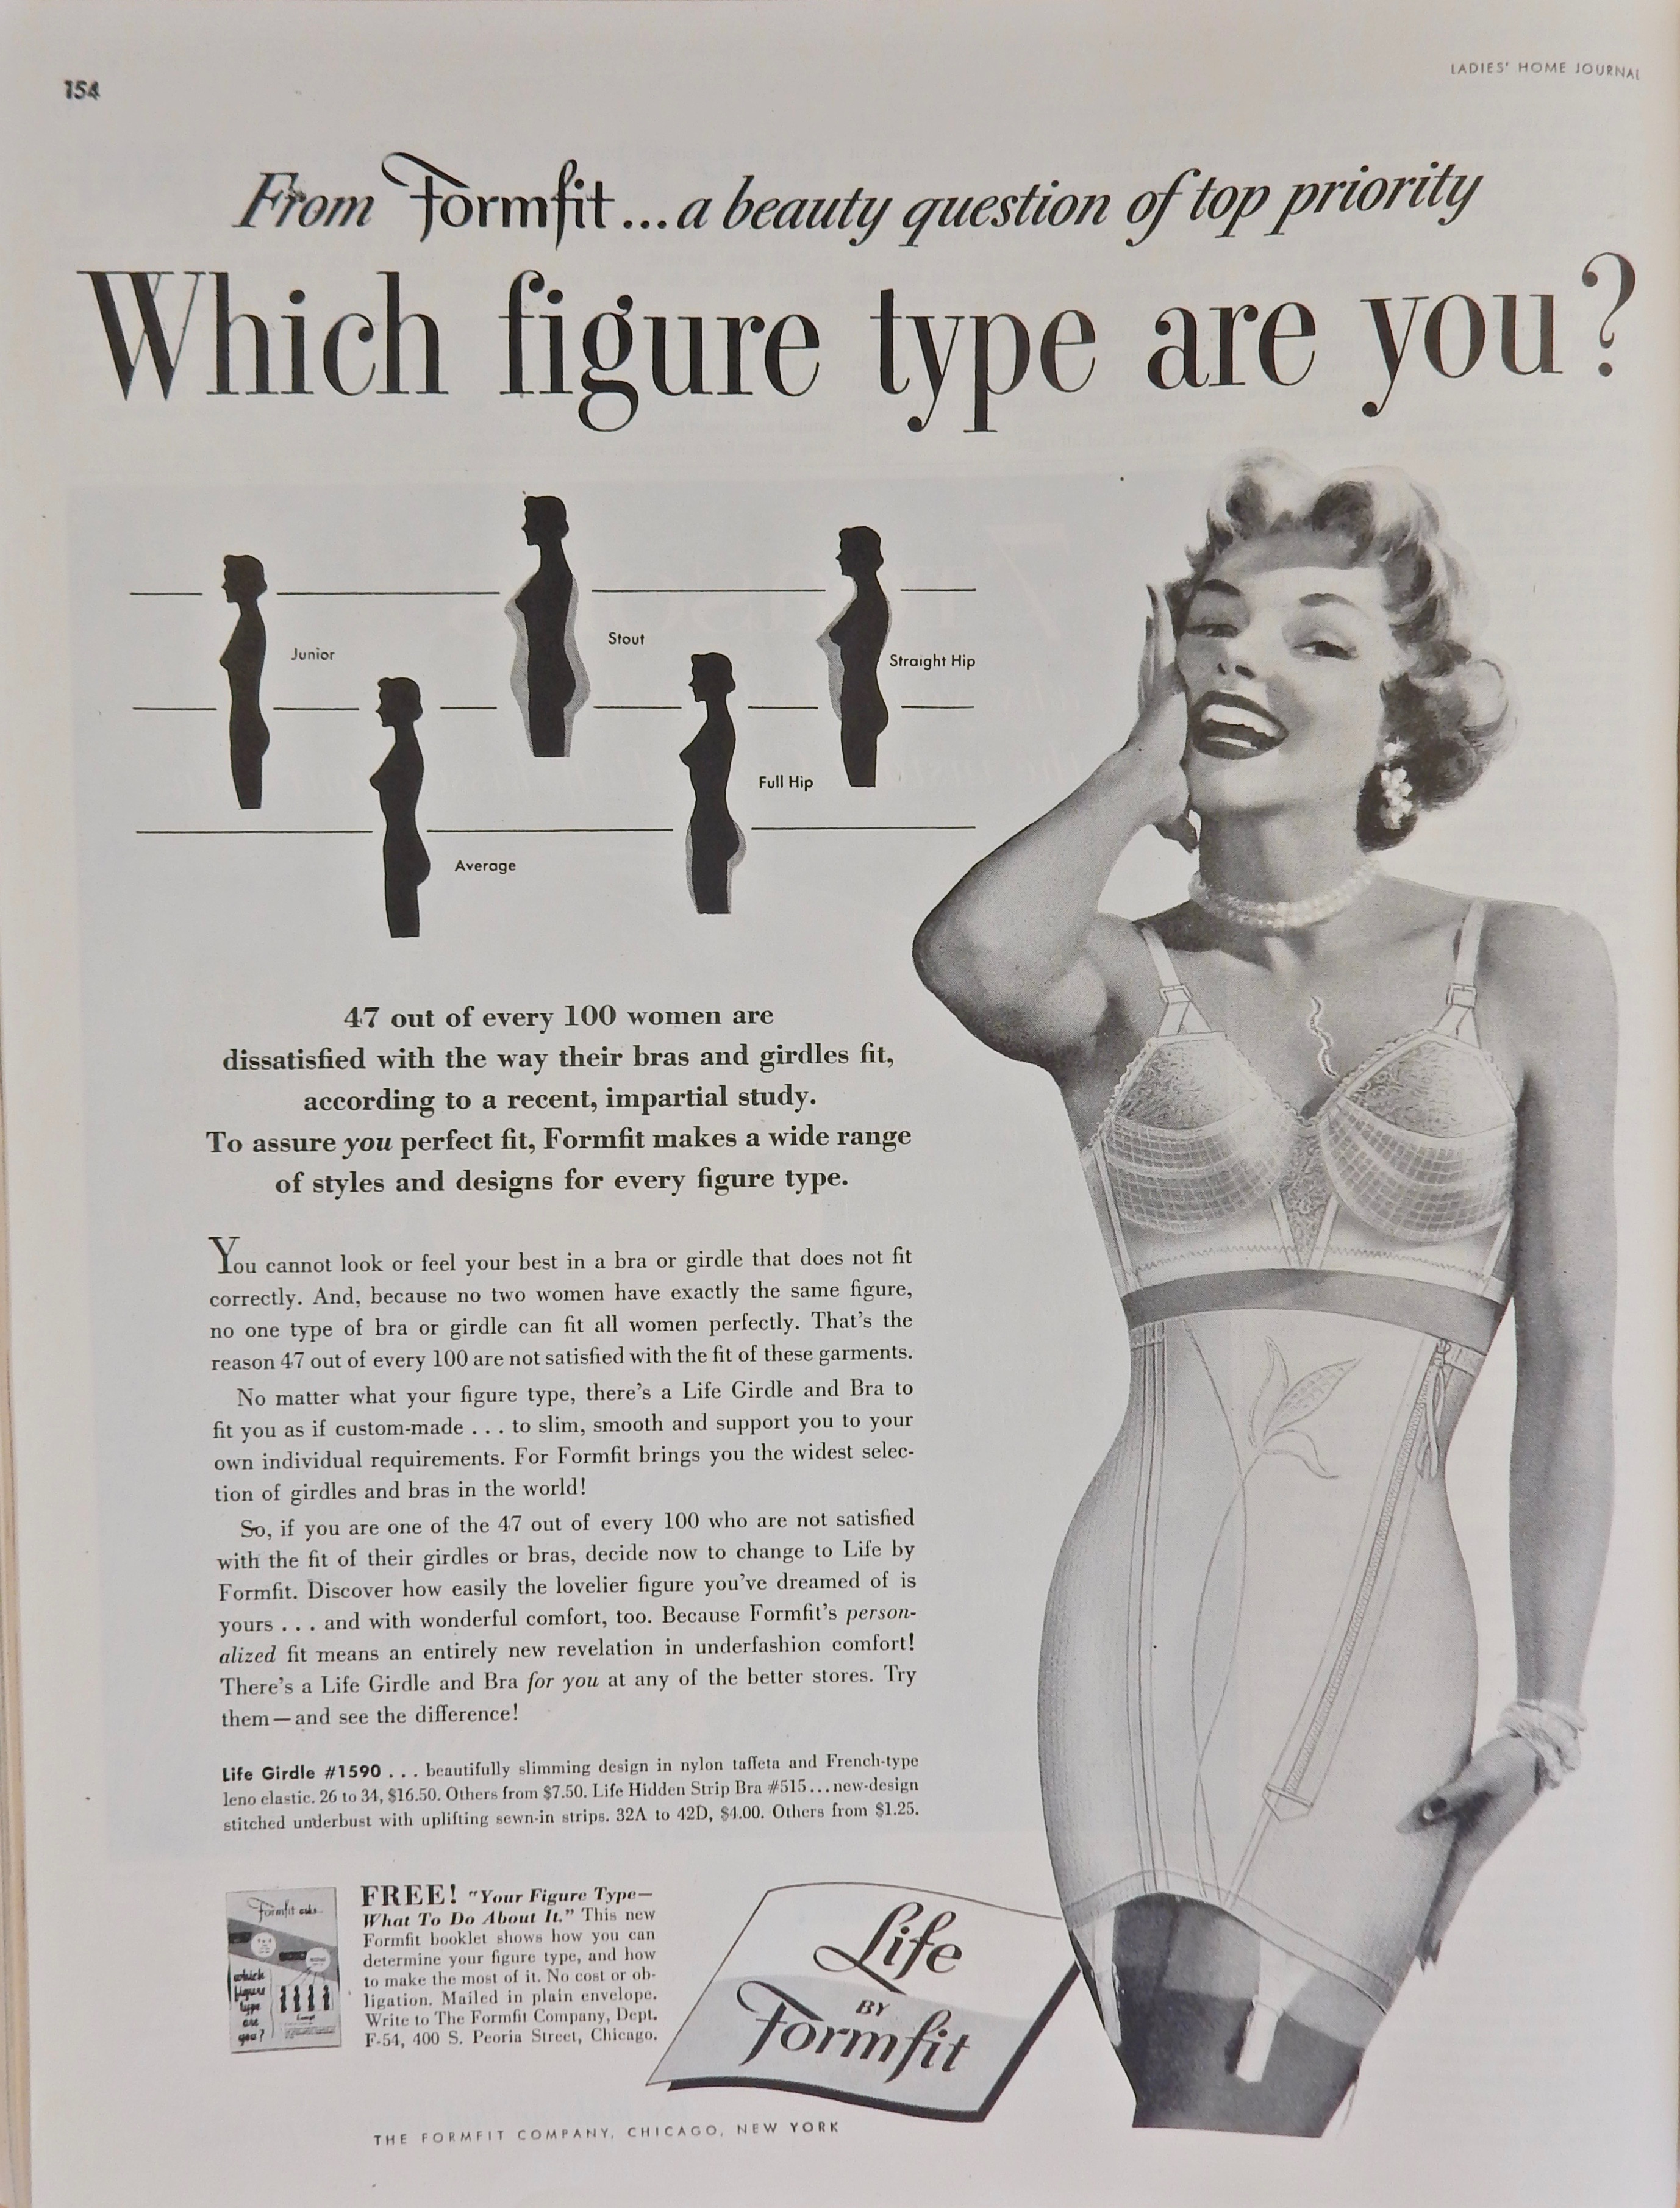 Bestform SLIM-A-WAIST Figure Girdle Women's Lingerie 1940 Vintage Print Ad